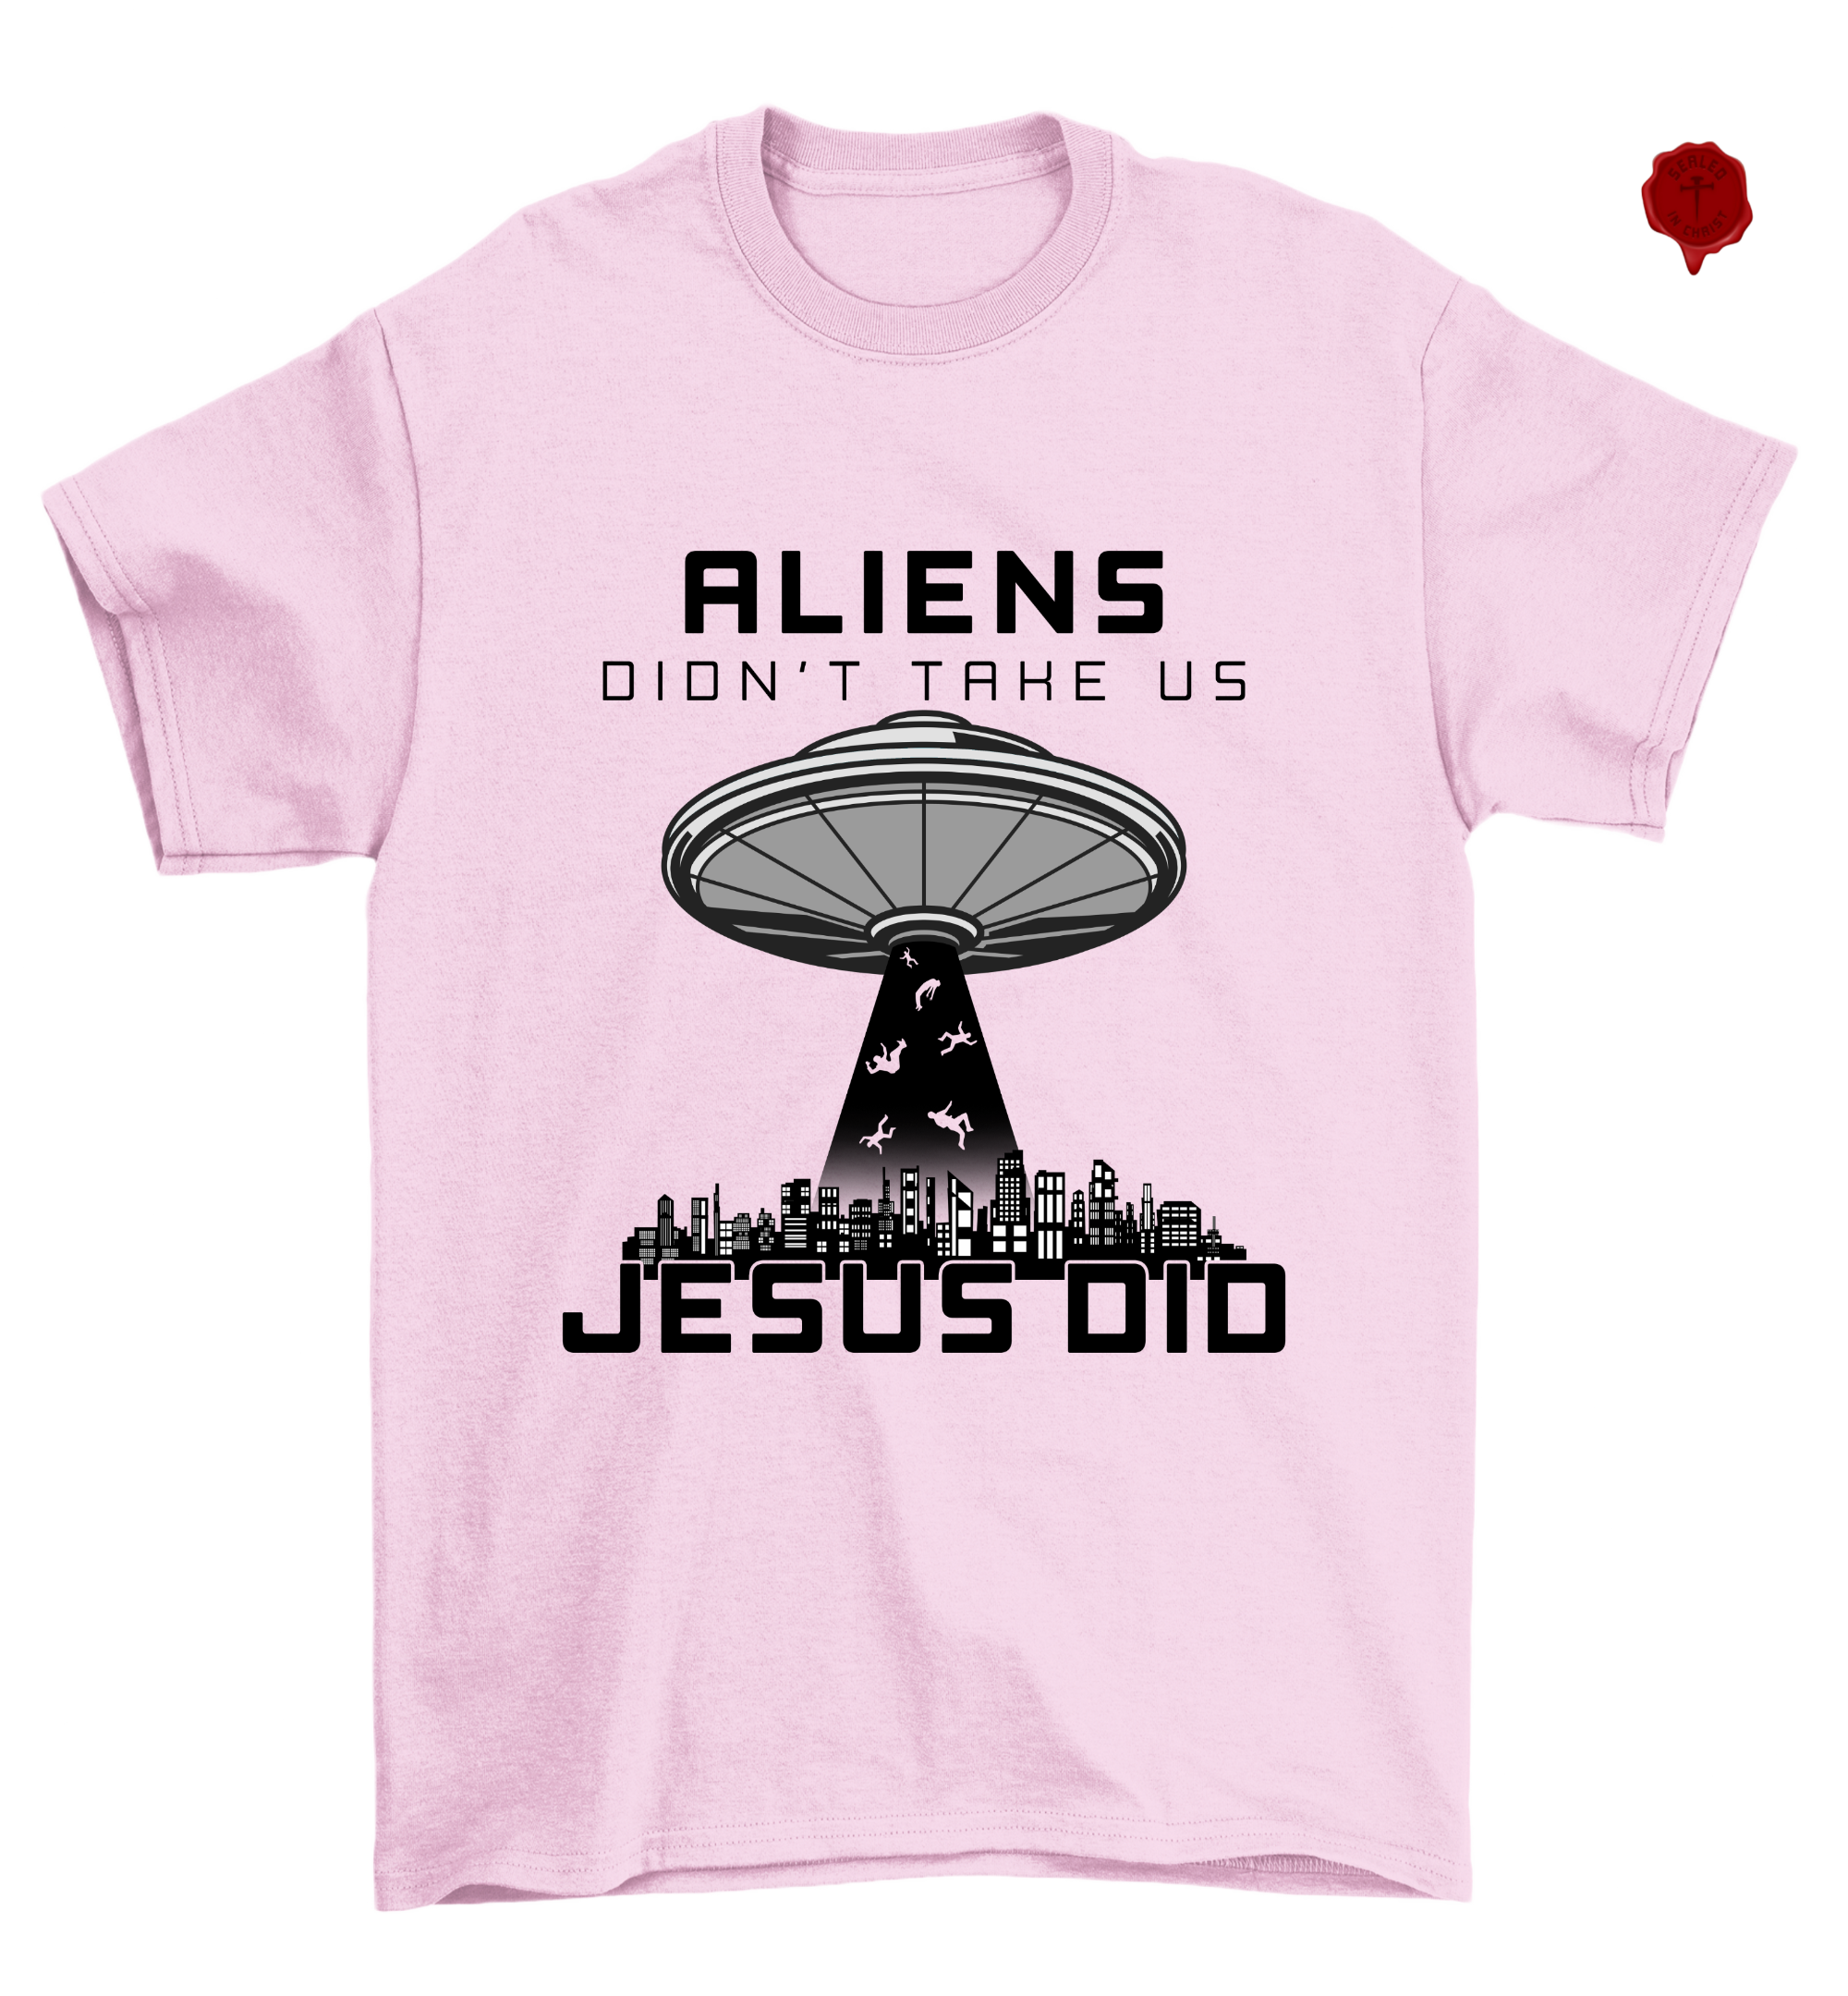 Aliens Didn't take Us Jesus Did